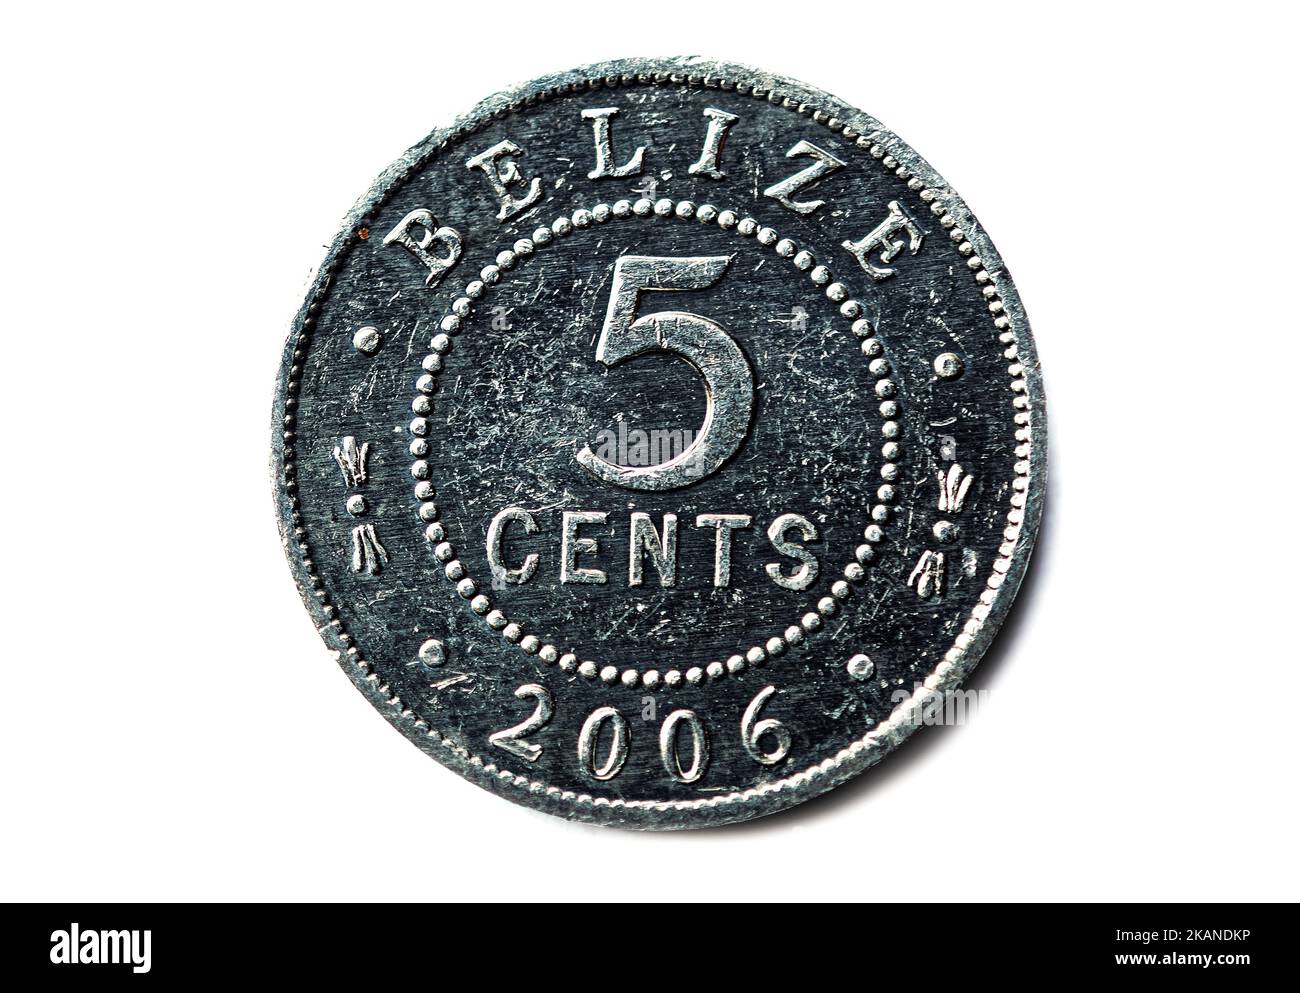 Photo coins Belize, 5 cents, 2006 Stock Photo